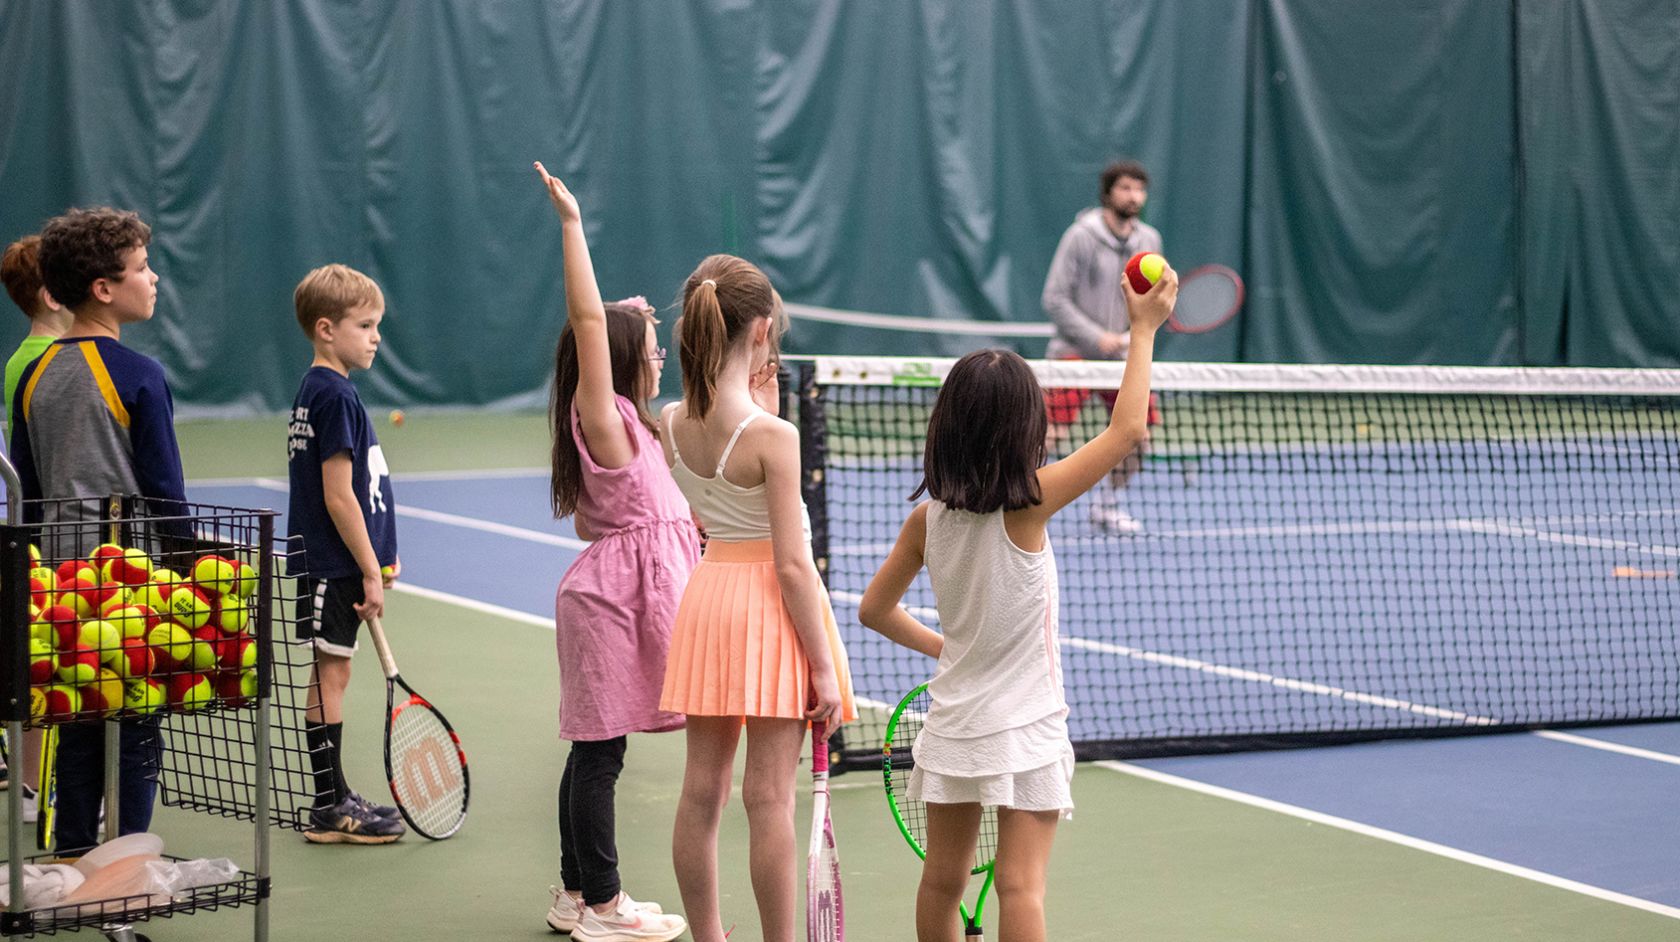 Kids Playing Tennis On Court